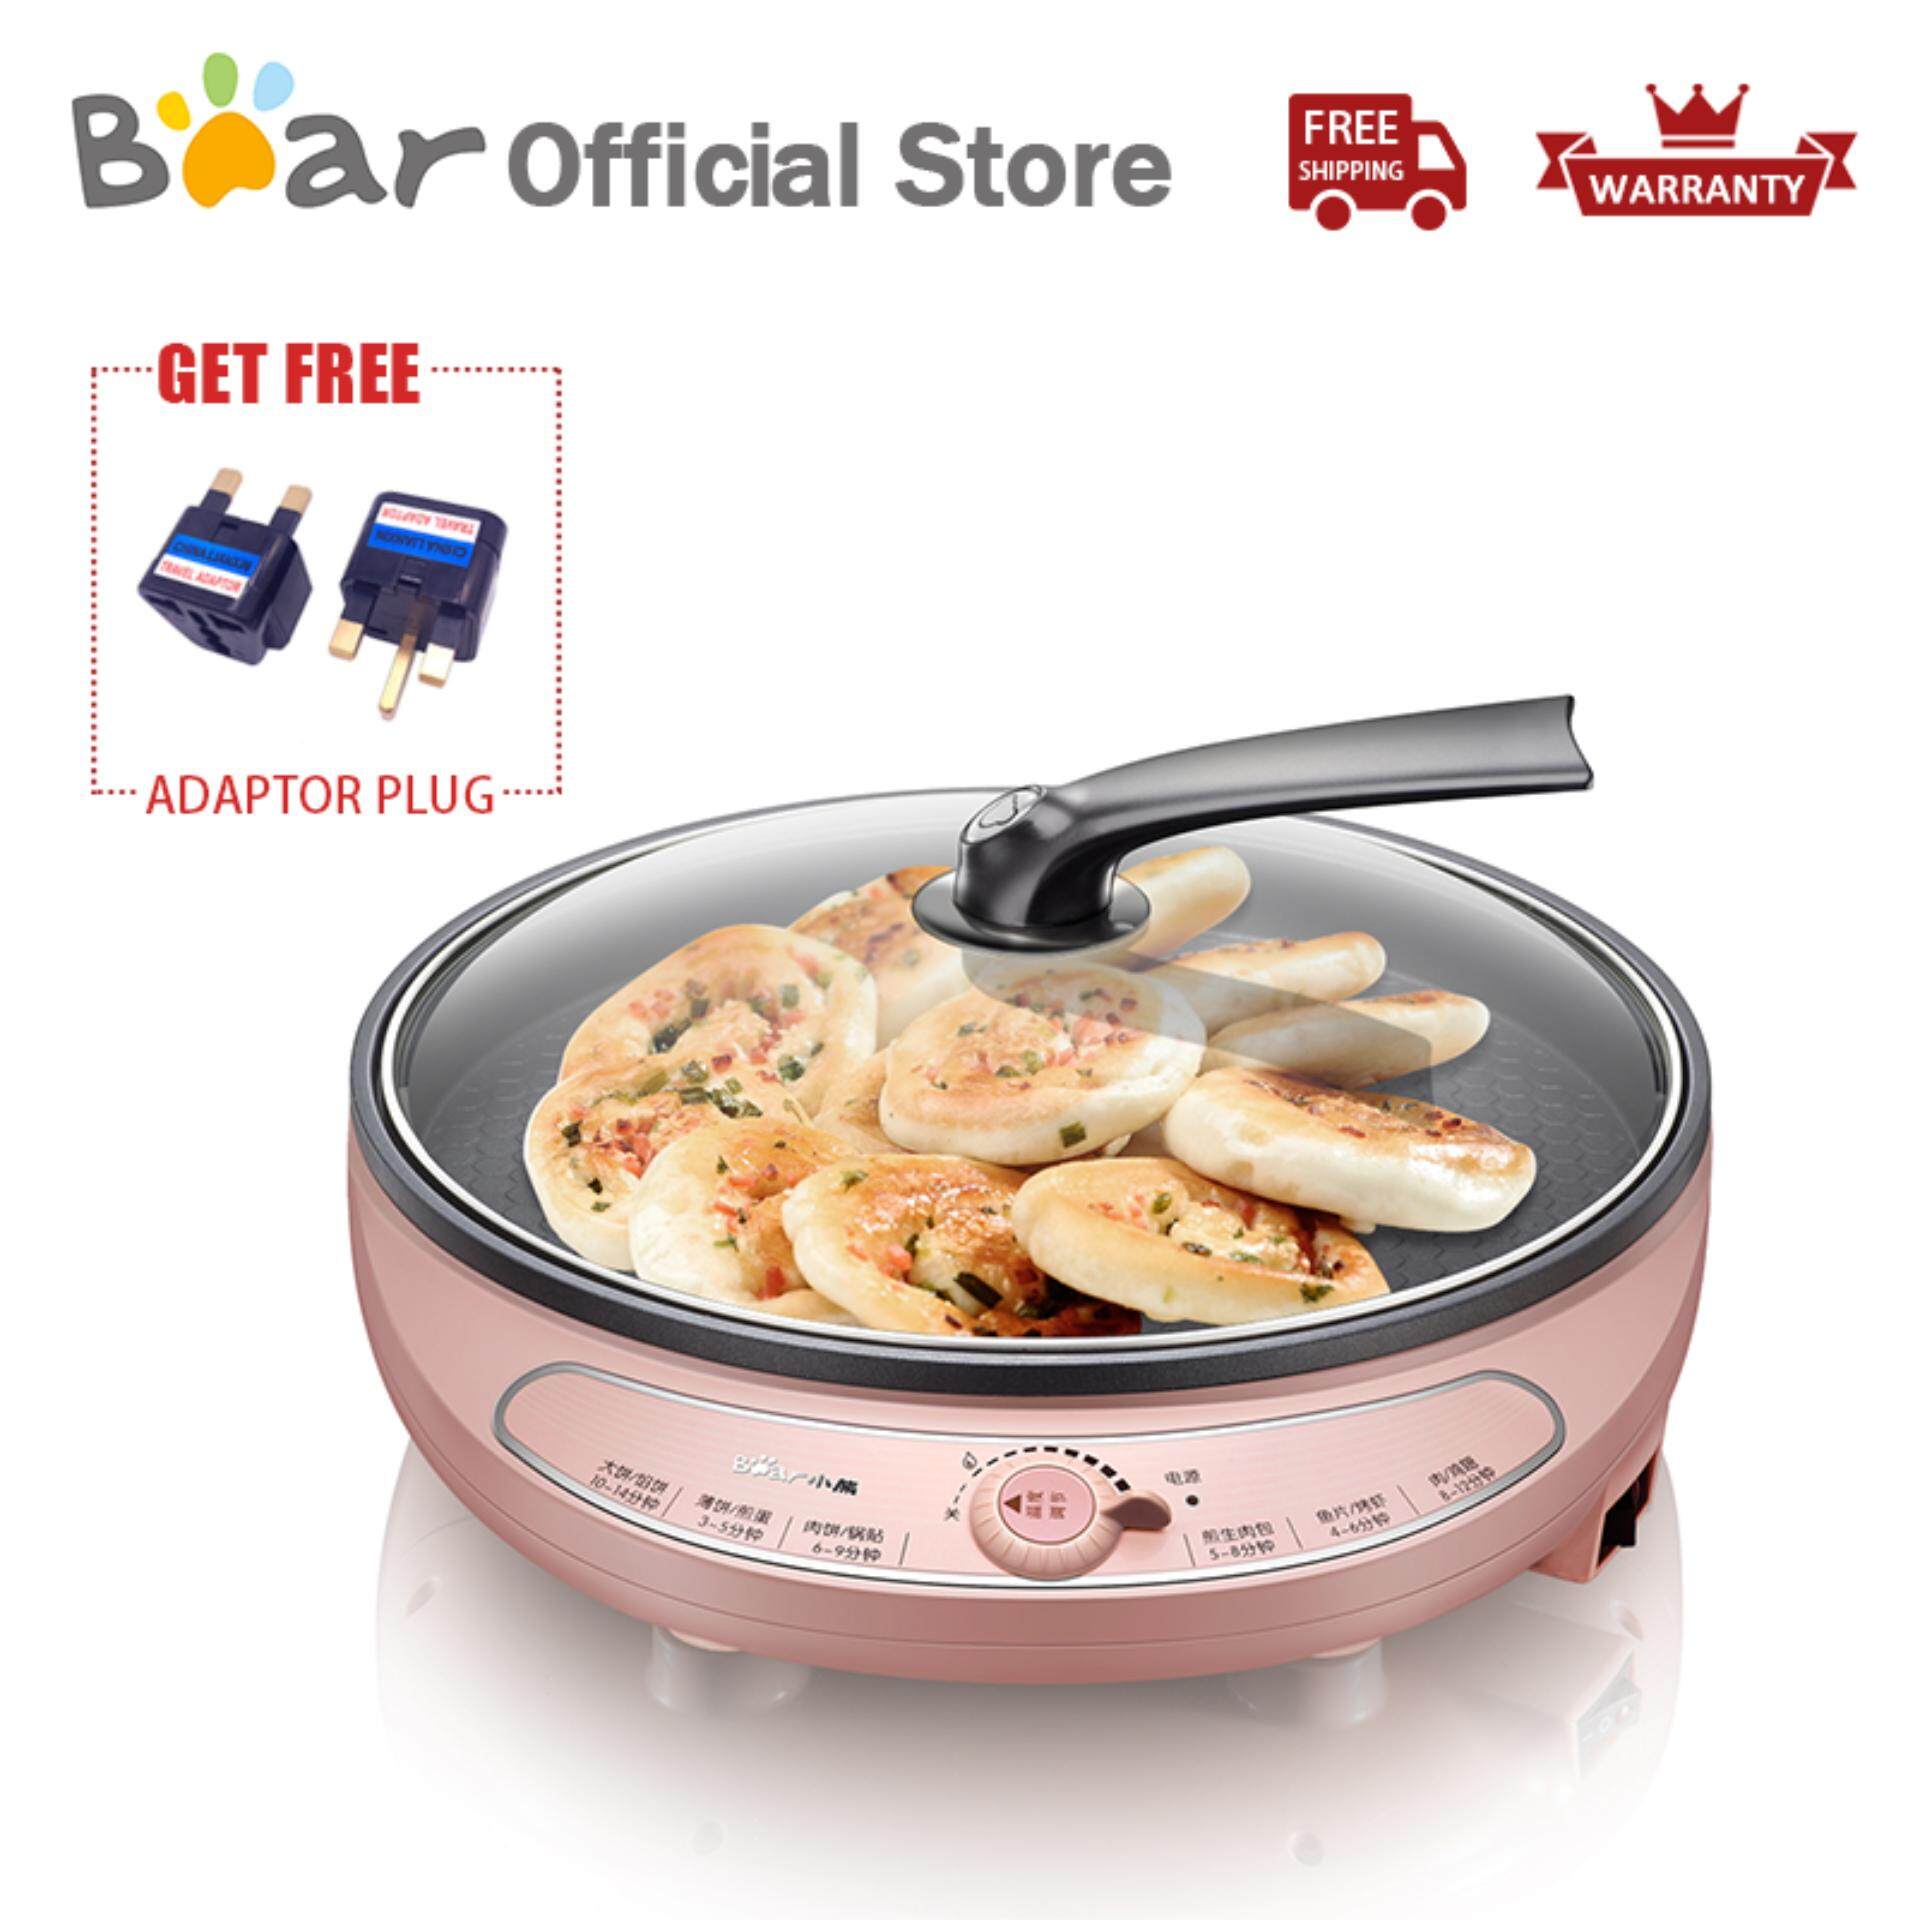 Bear Multipurpose BBQ Grill / Teppanyaki Pan / Pancake Pan DBC-B10D3 waffle maker Electric Baking Pan